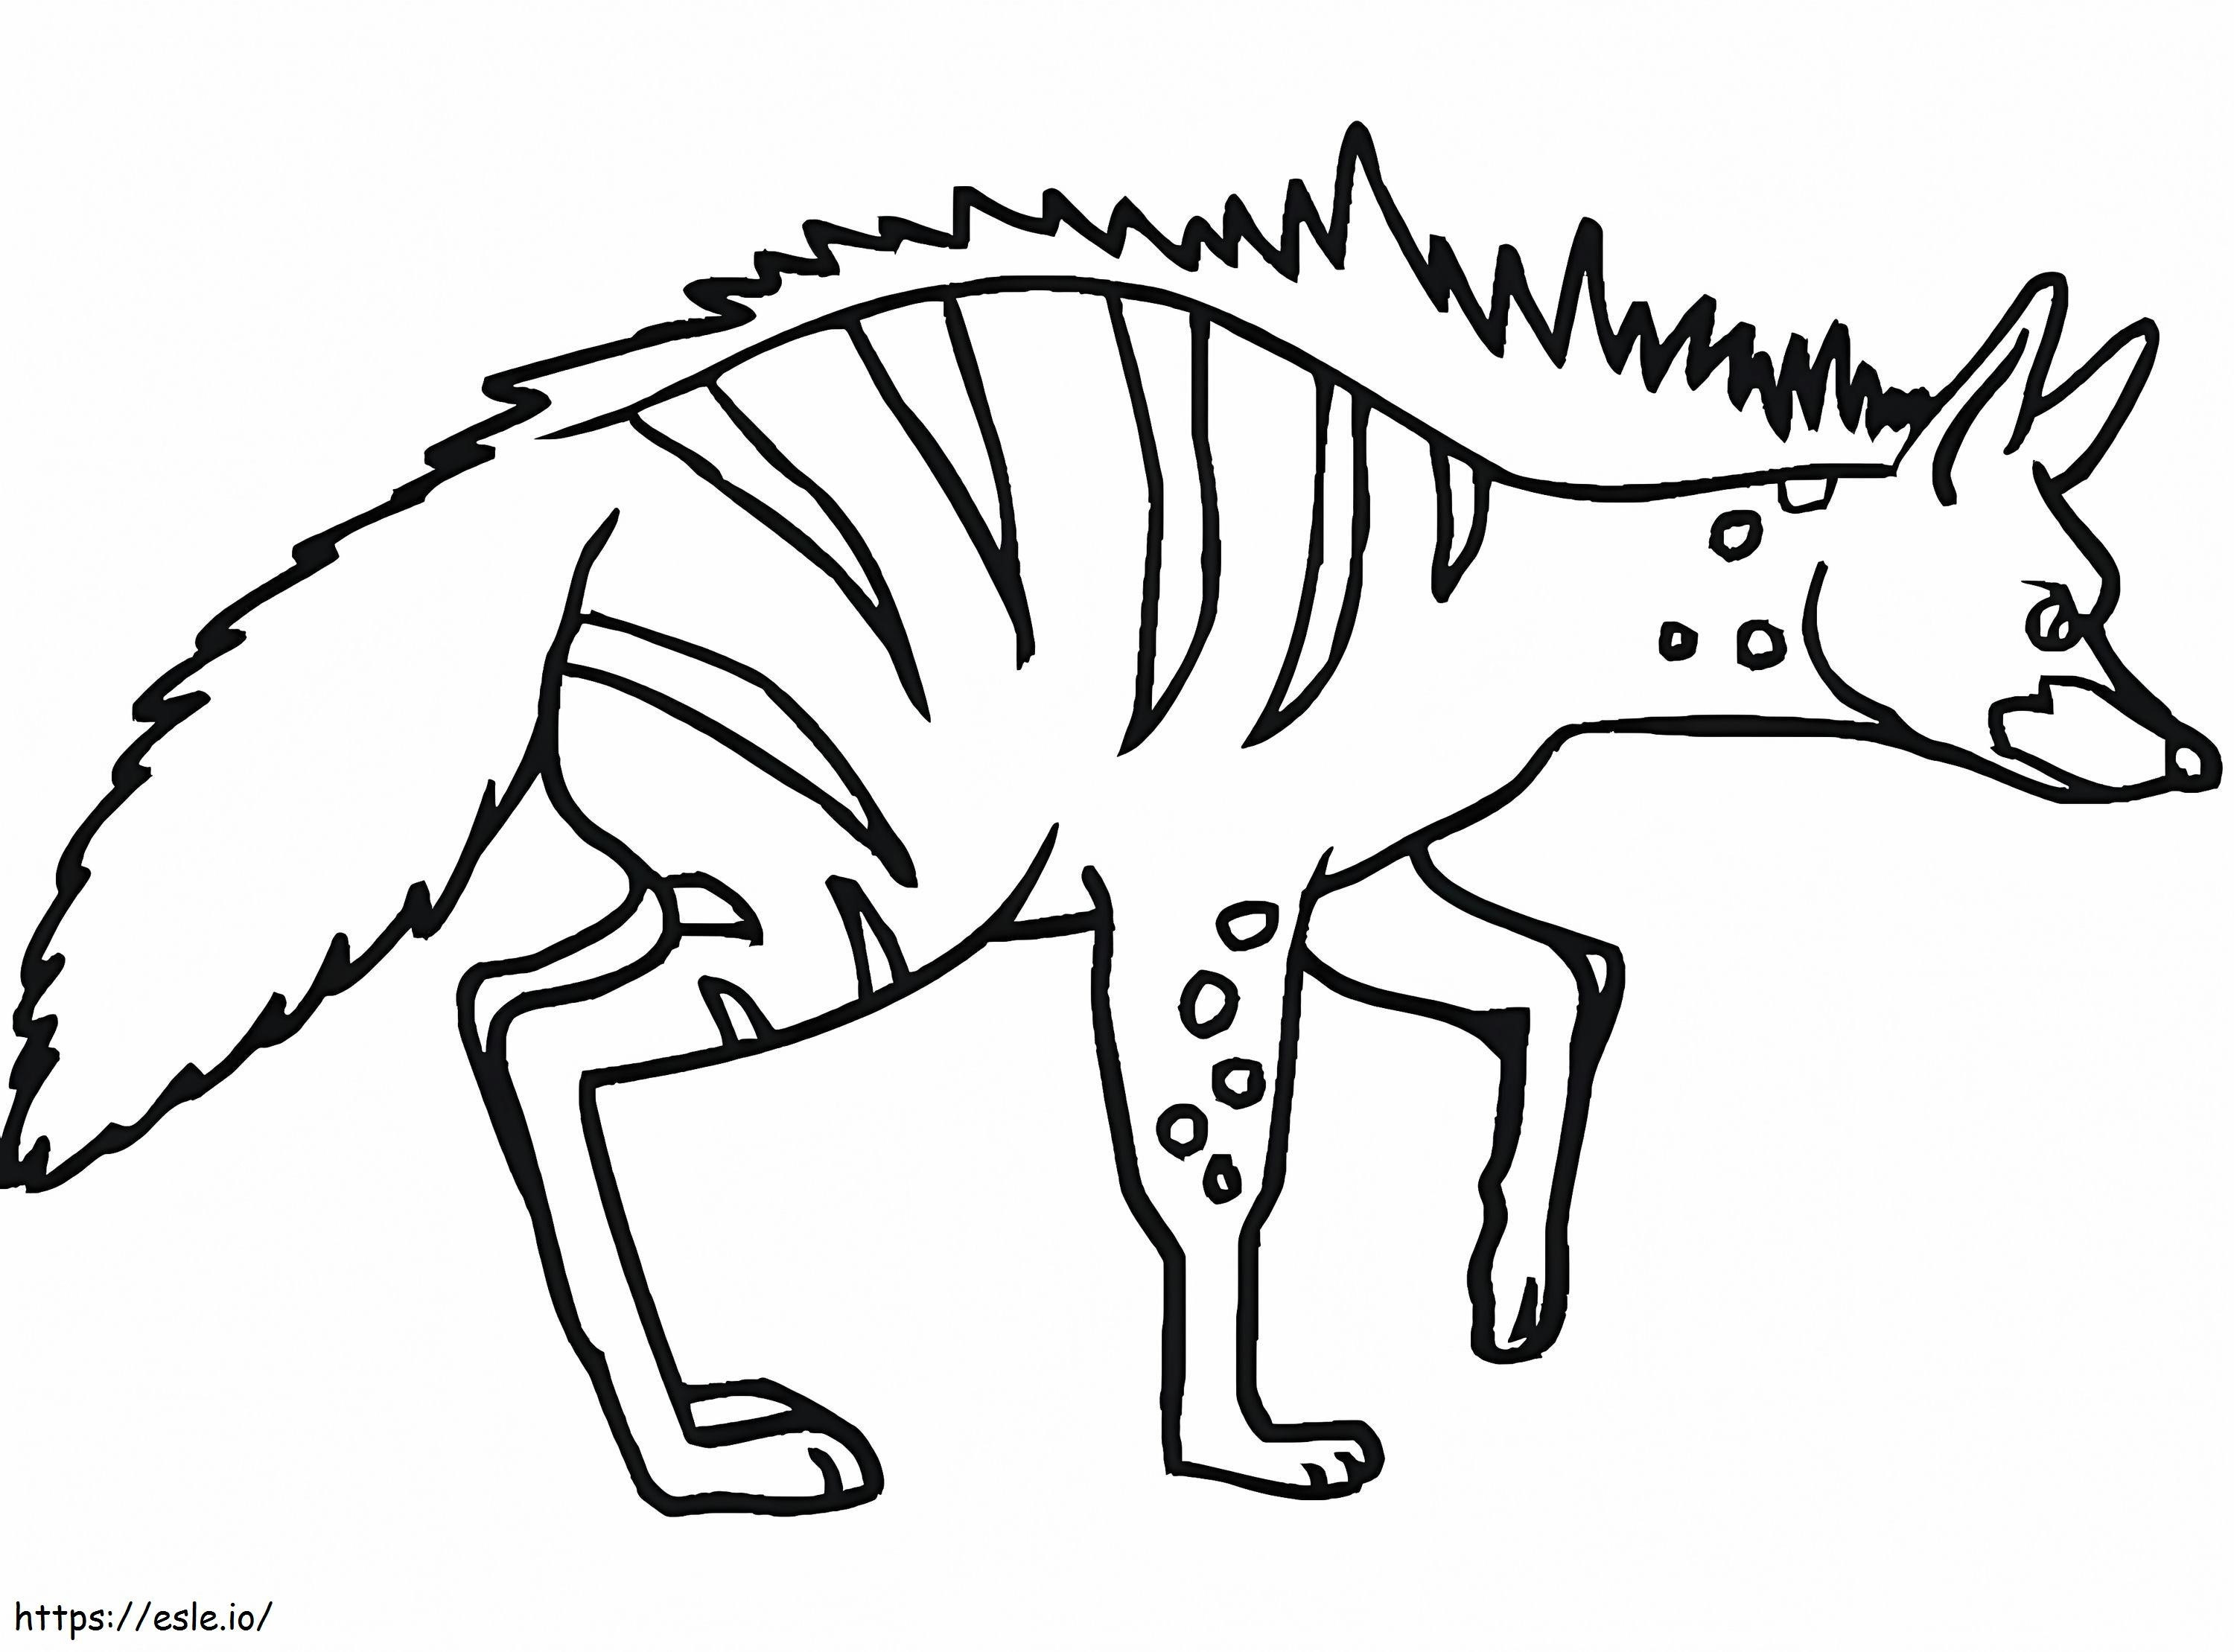 Striped Hyena 1 coloring page